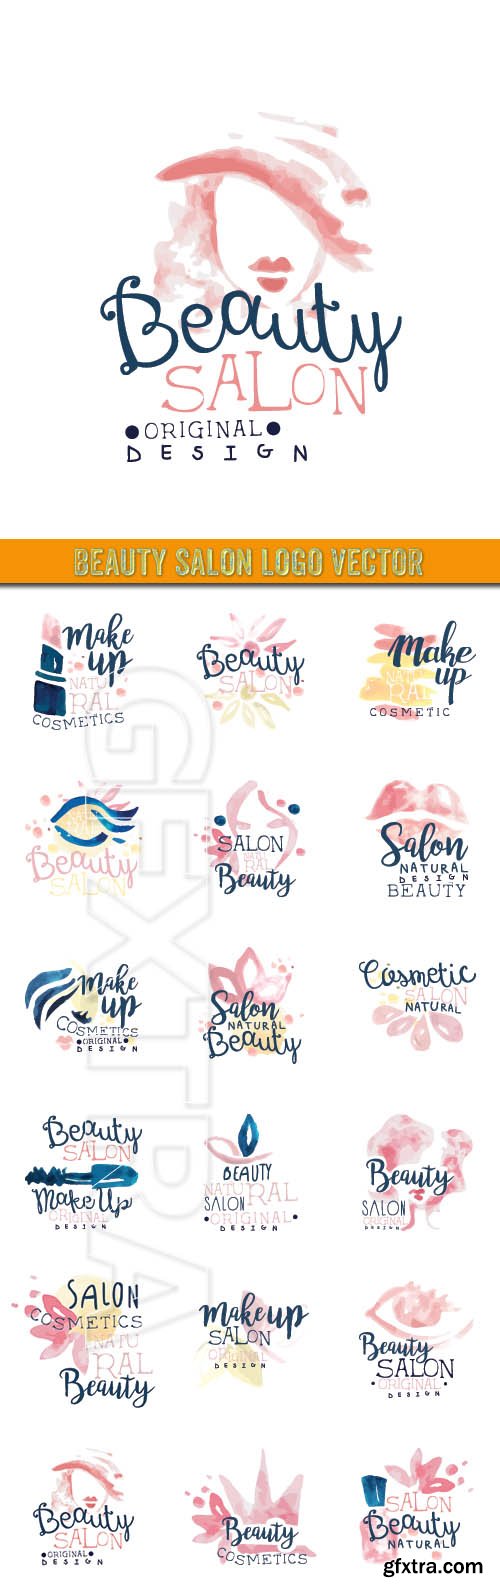 Beauty Salon Logo Vector Gfxtra